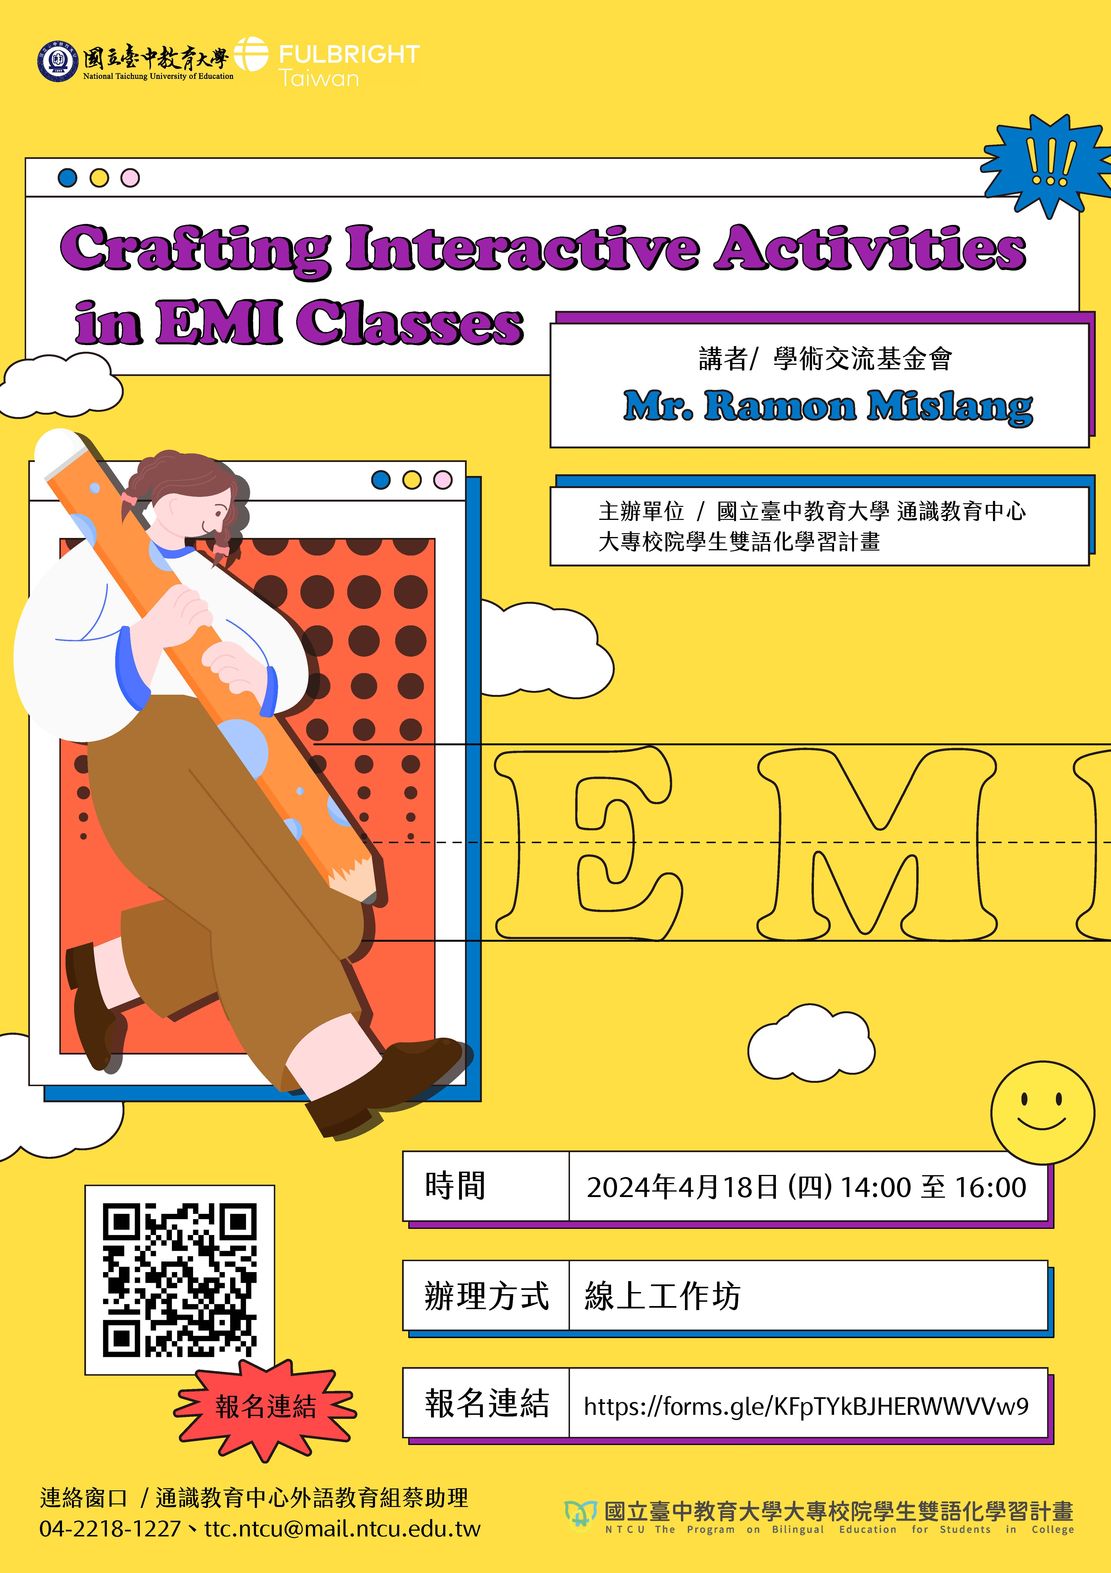 Crafting Interactive Activities in EMI Classes